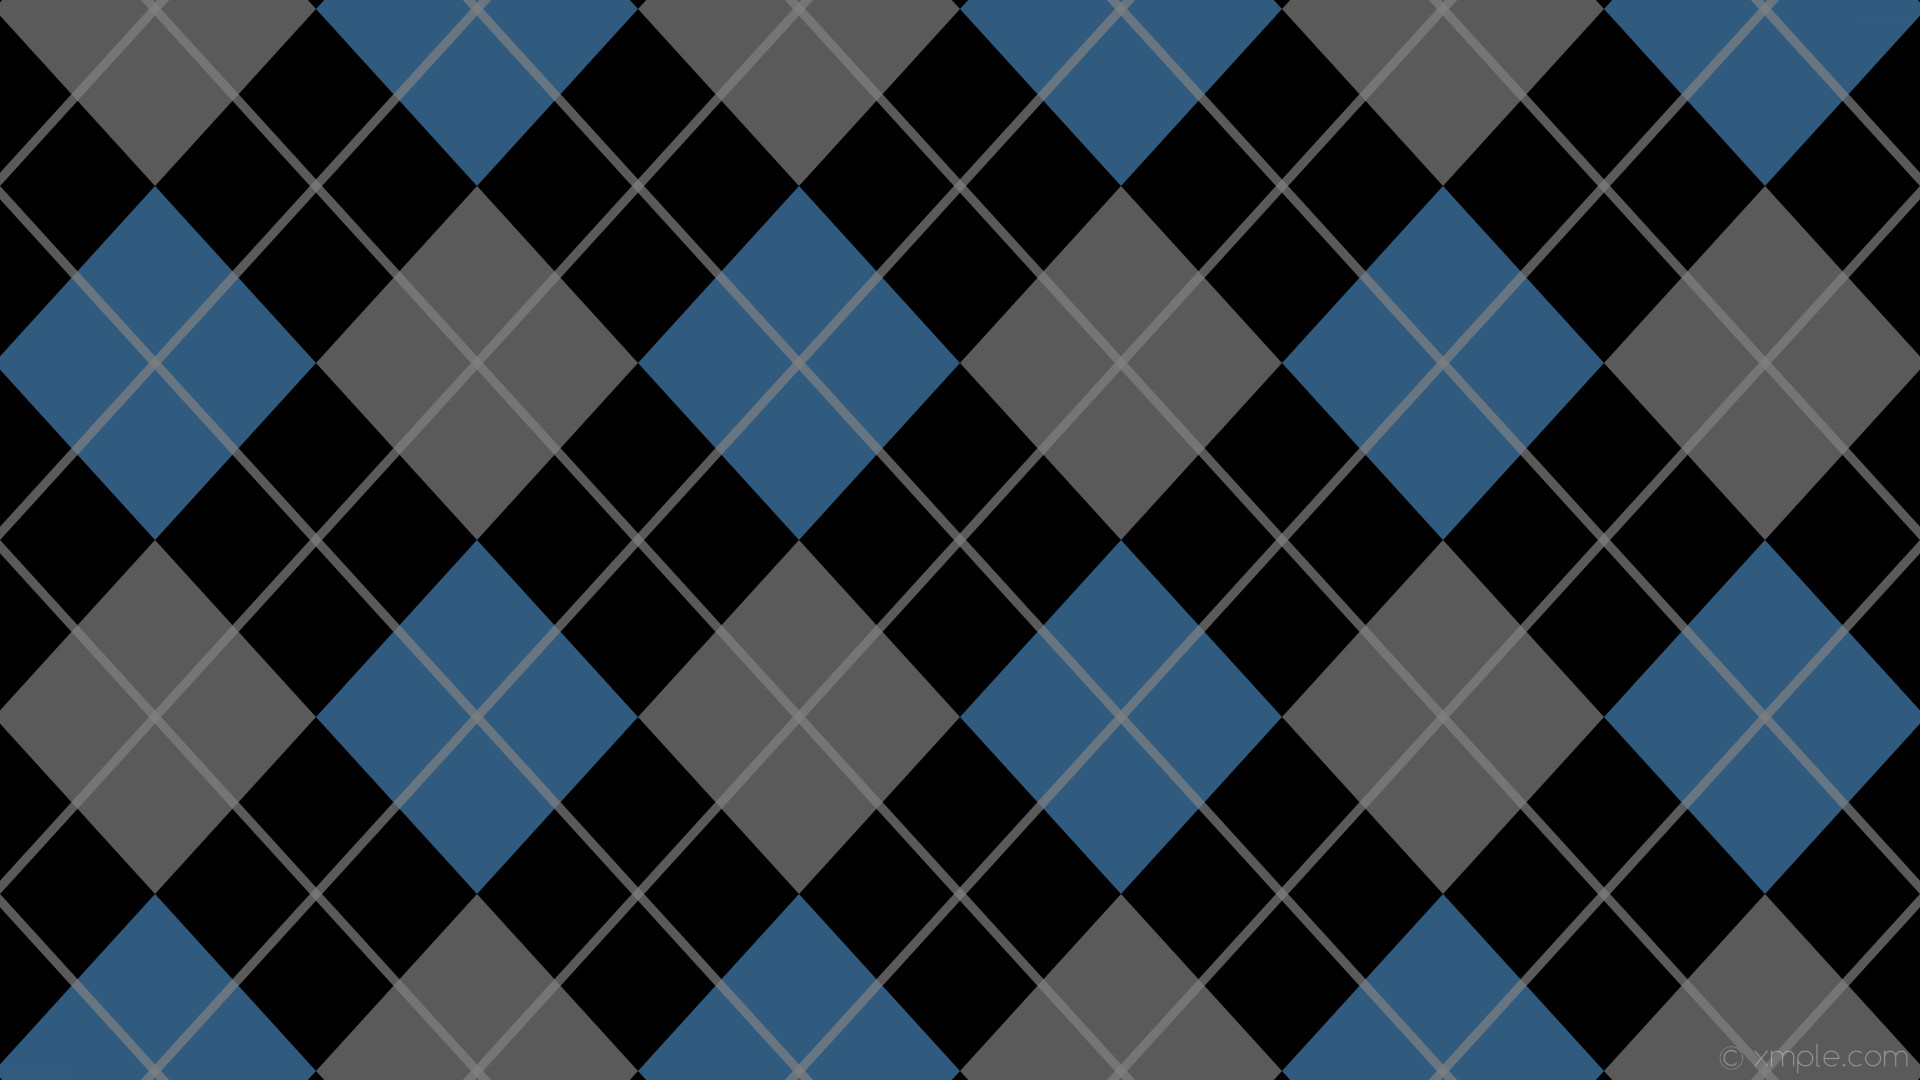 1920x1080 wallpaper dual brown black argyle diamonds blue grey steel blue gray  chocolate #000000 #4682b4